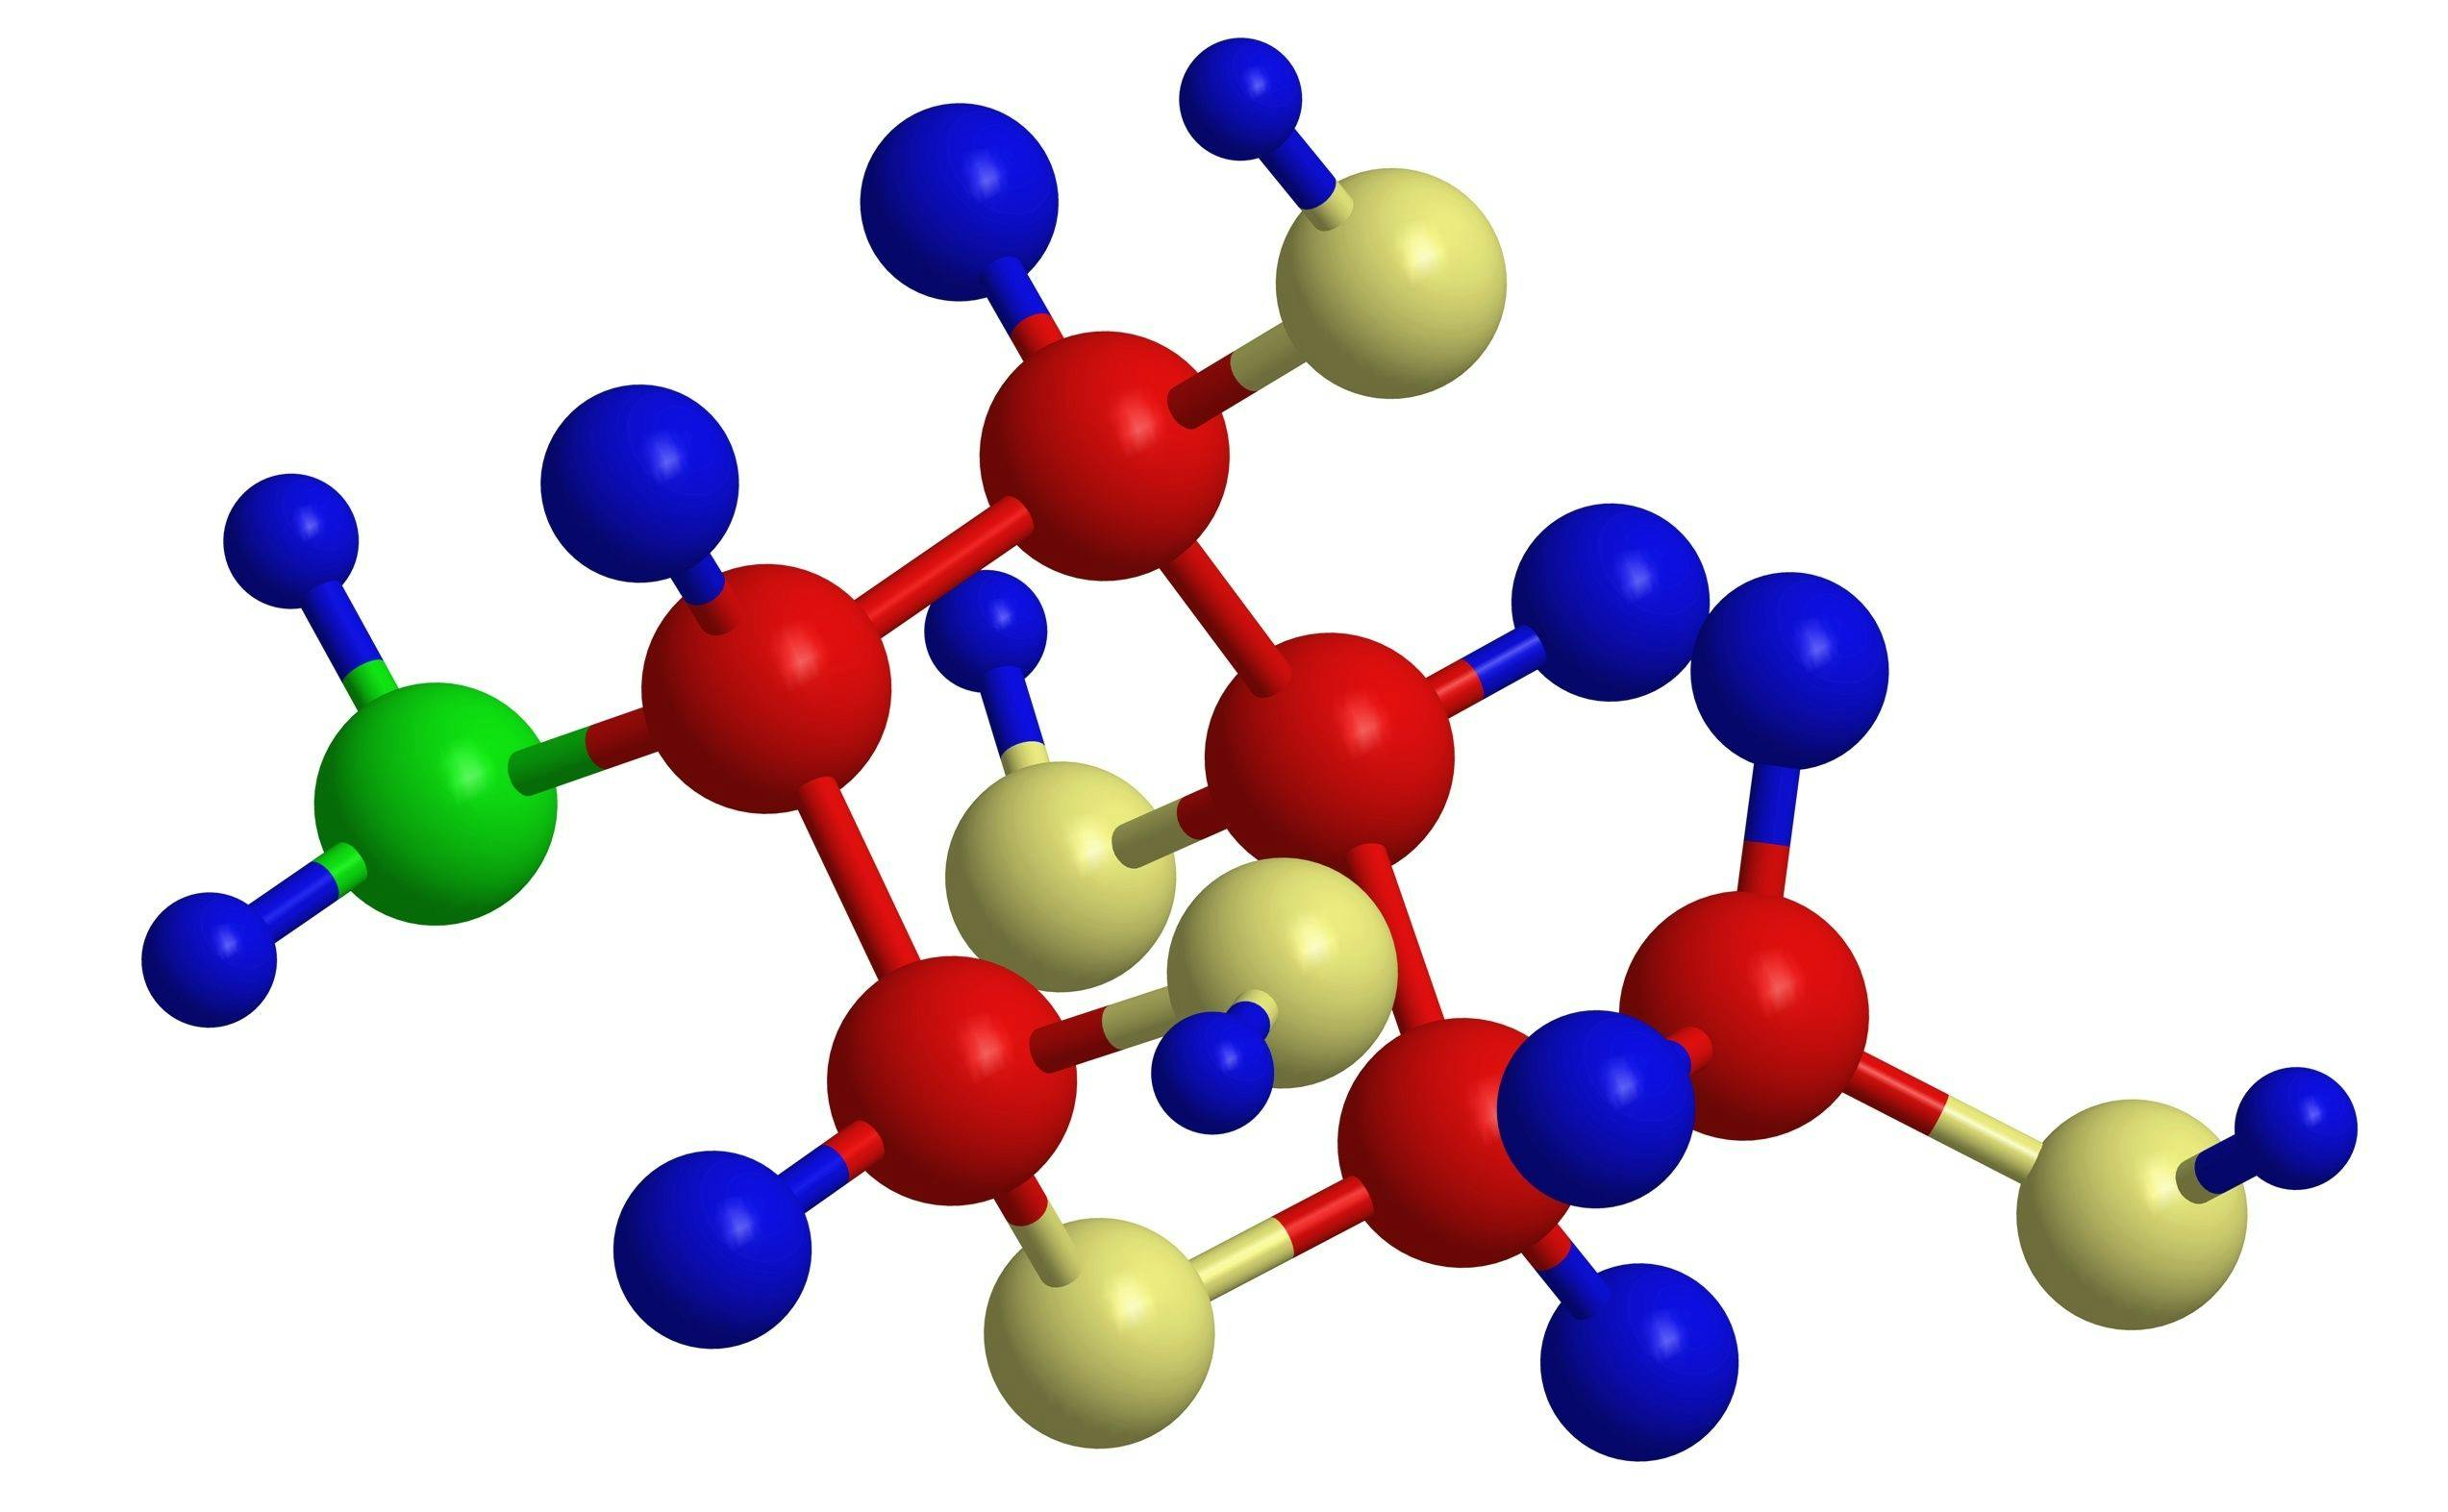 Molecular structure of D-glucosamine-basic unit of chitosan | Image Credit: © John Doe - stock.adobe.com